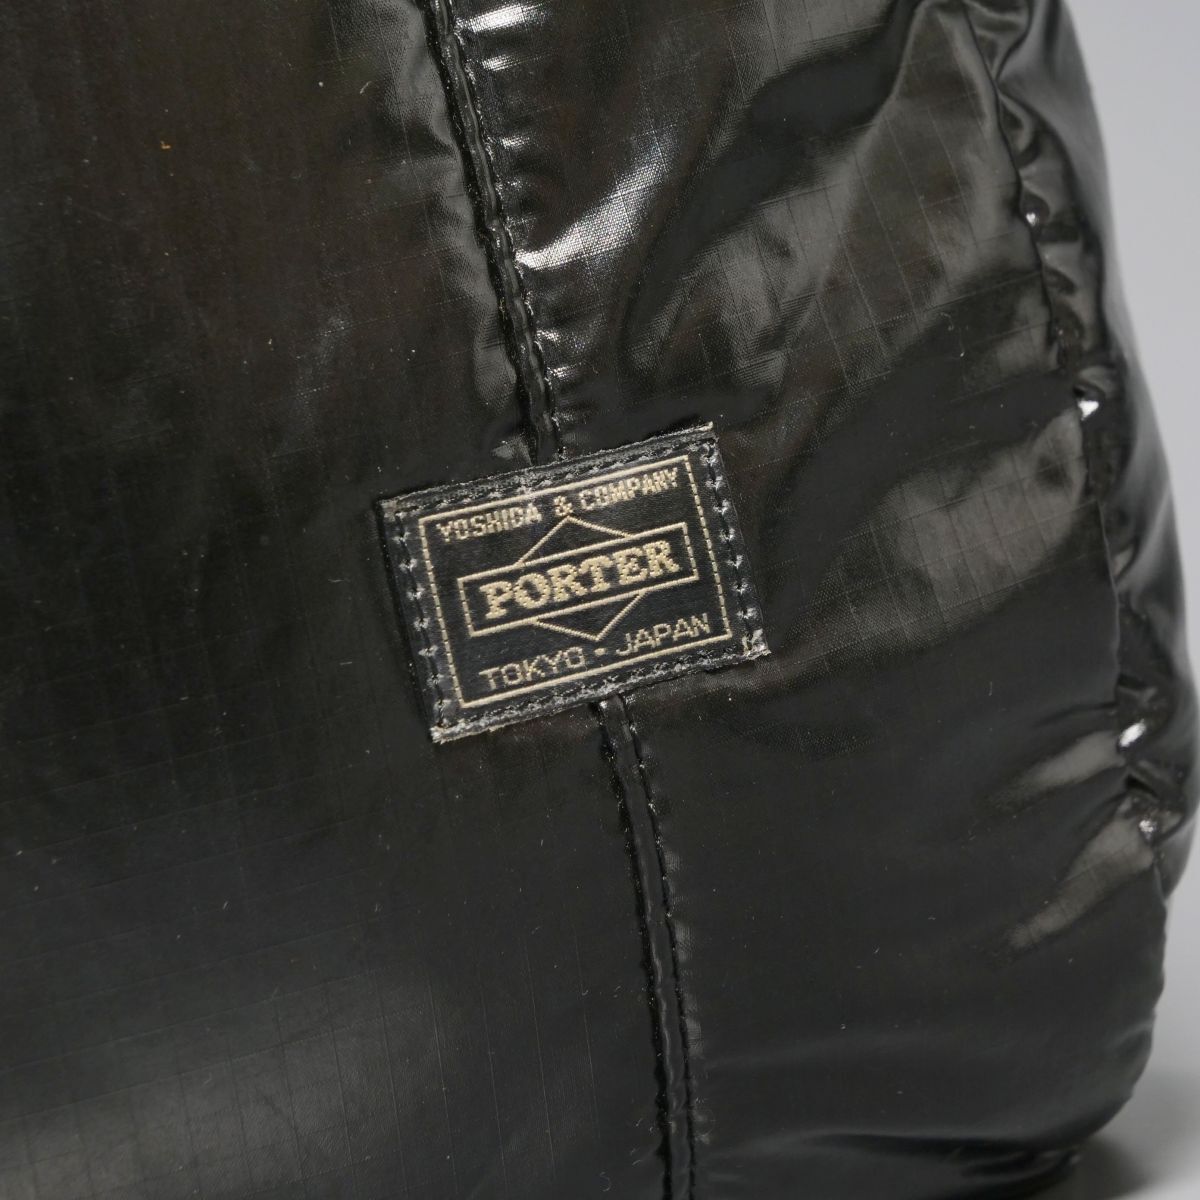 GP8047:PORTER/ Porter * Yoshida bag *CIRE/si-re* rucksack * Day Pack * bag * black 